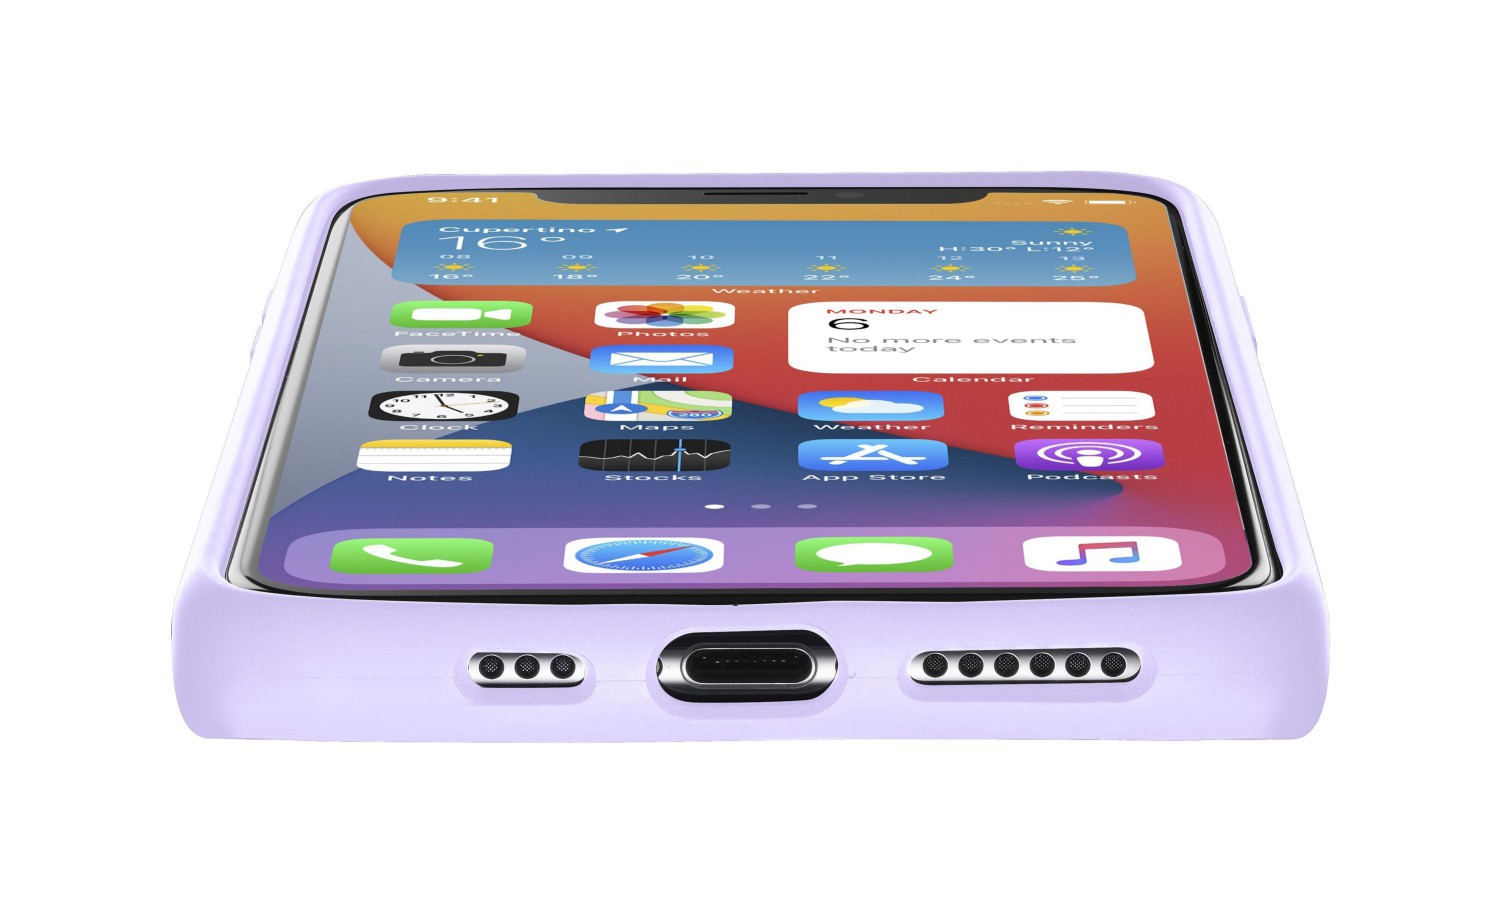 Cellularline Sensation silikonový kryt, pouzdro, obal Apple iPhone 12/12 Pro violet